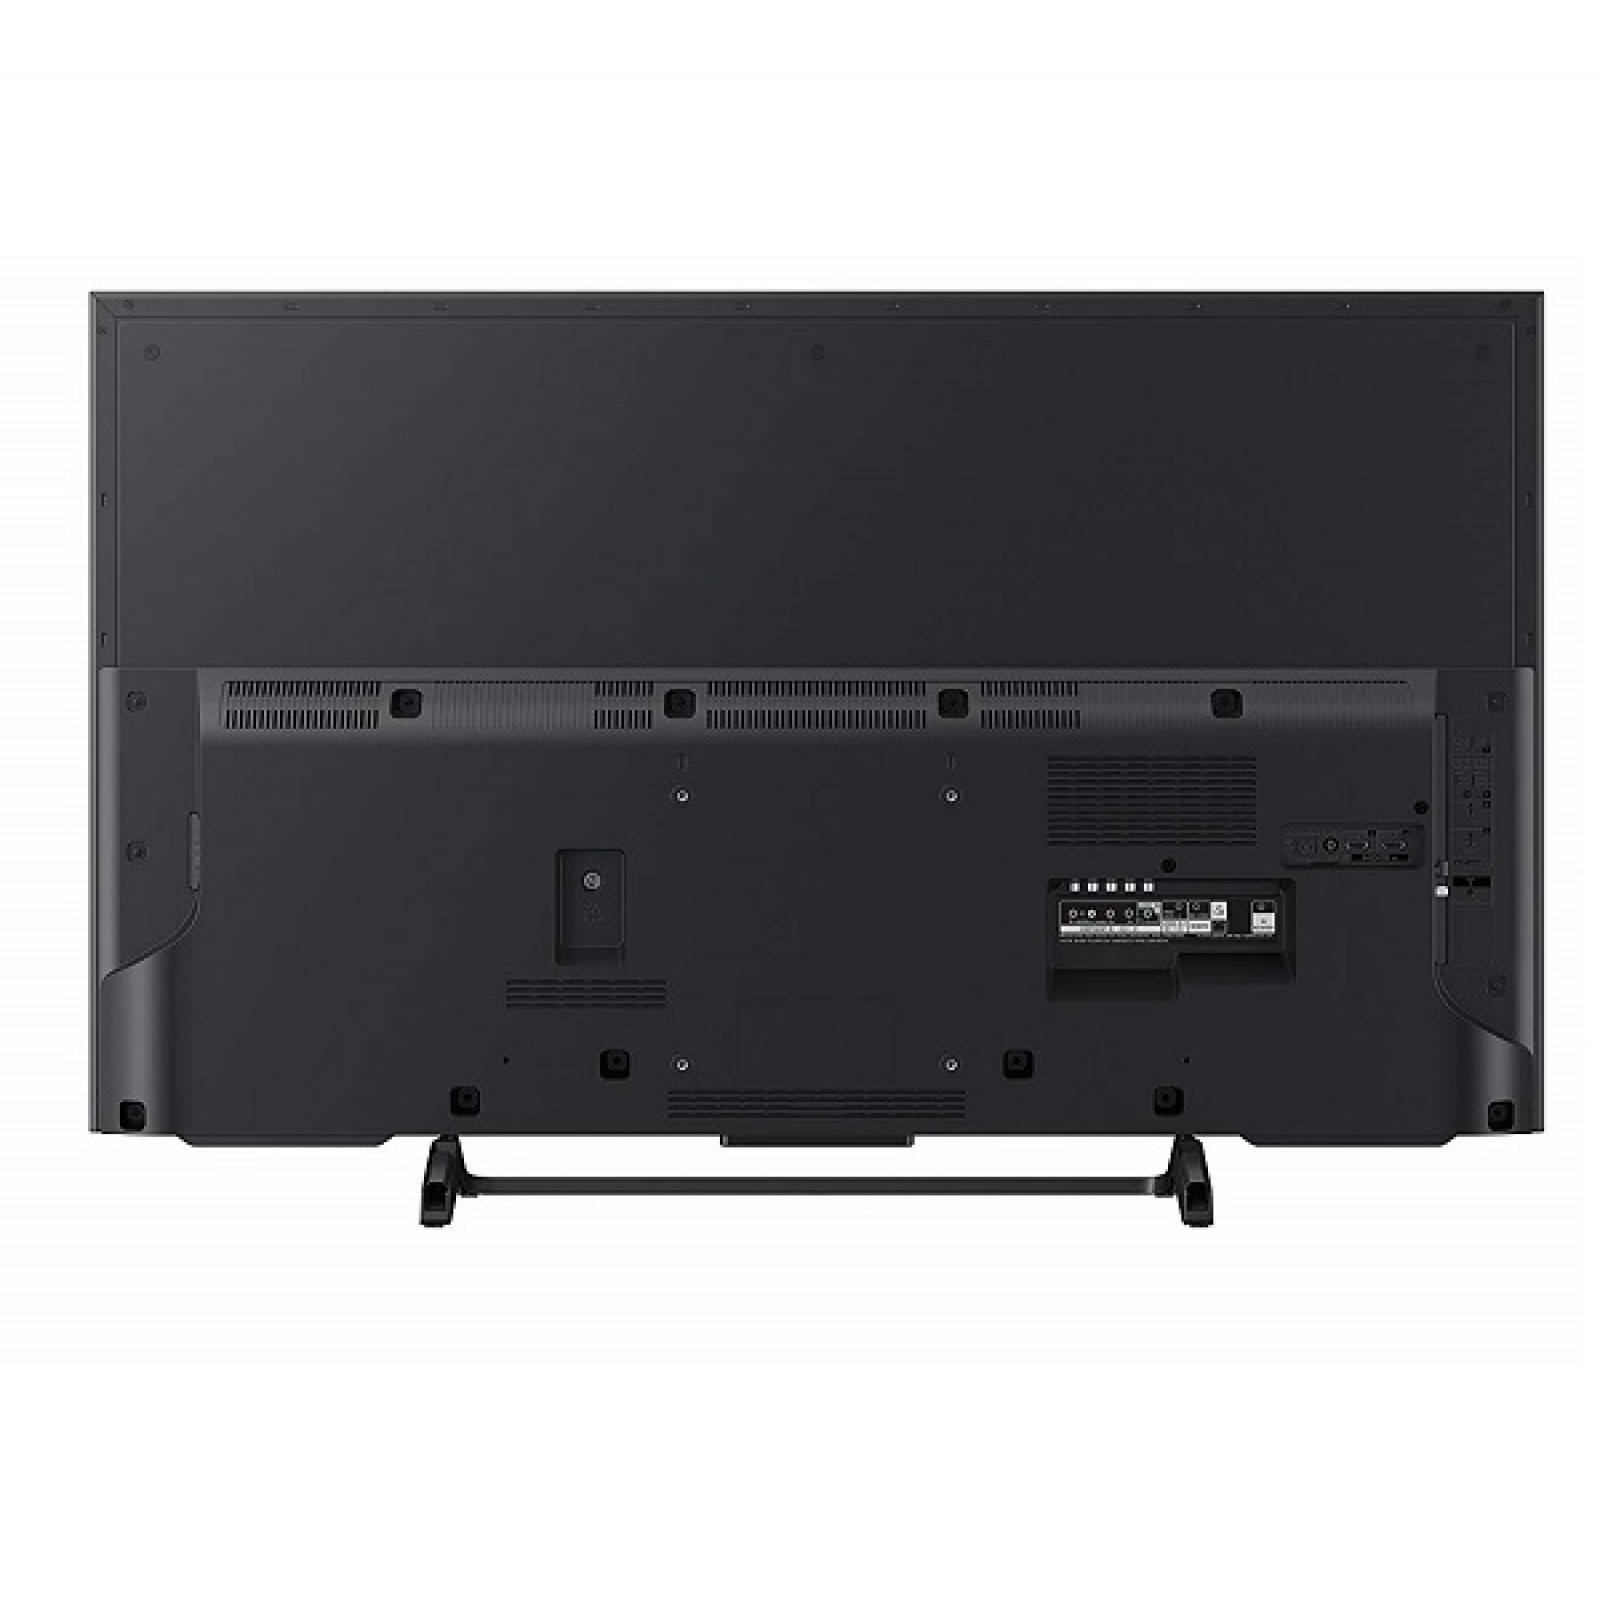 Smart TV Sony 49 4K HDR UHD HDMI USB Bluetooth XBR-49X800E - Reacondicionado